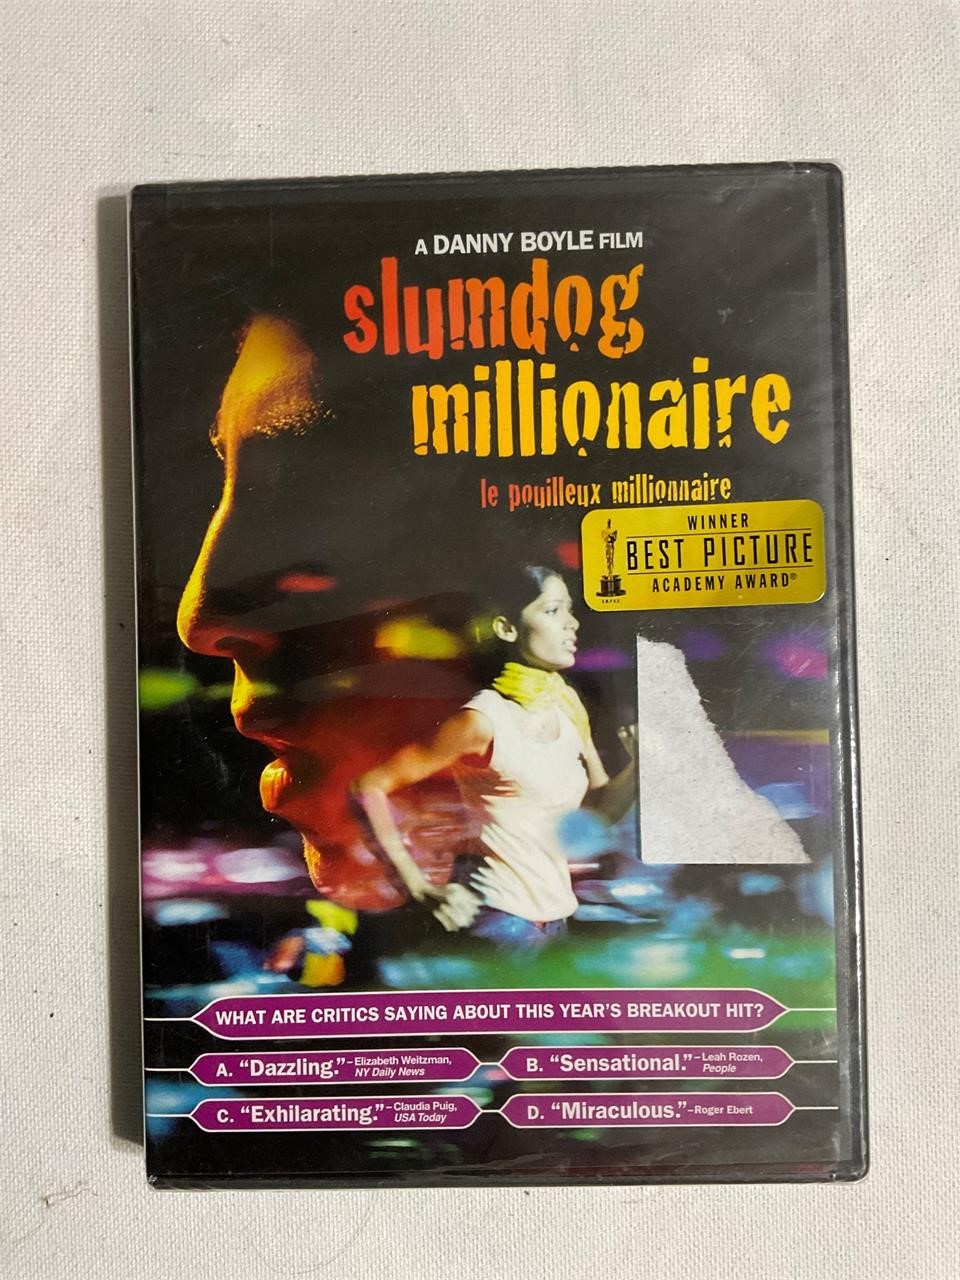 Sealed slumdog millionaire movie